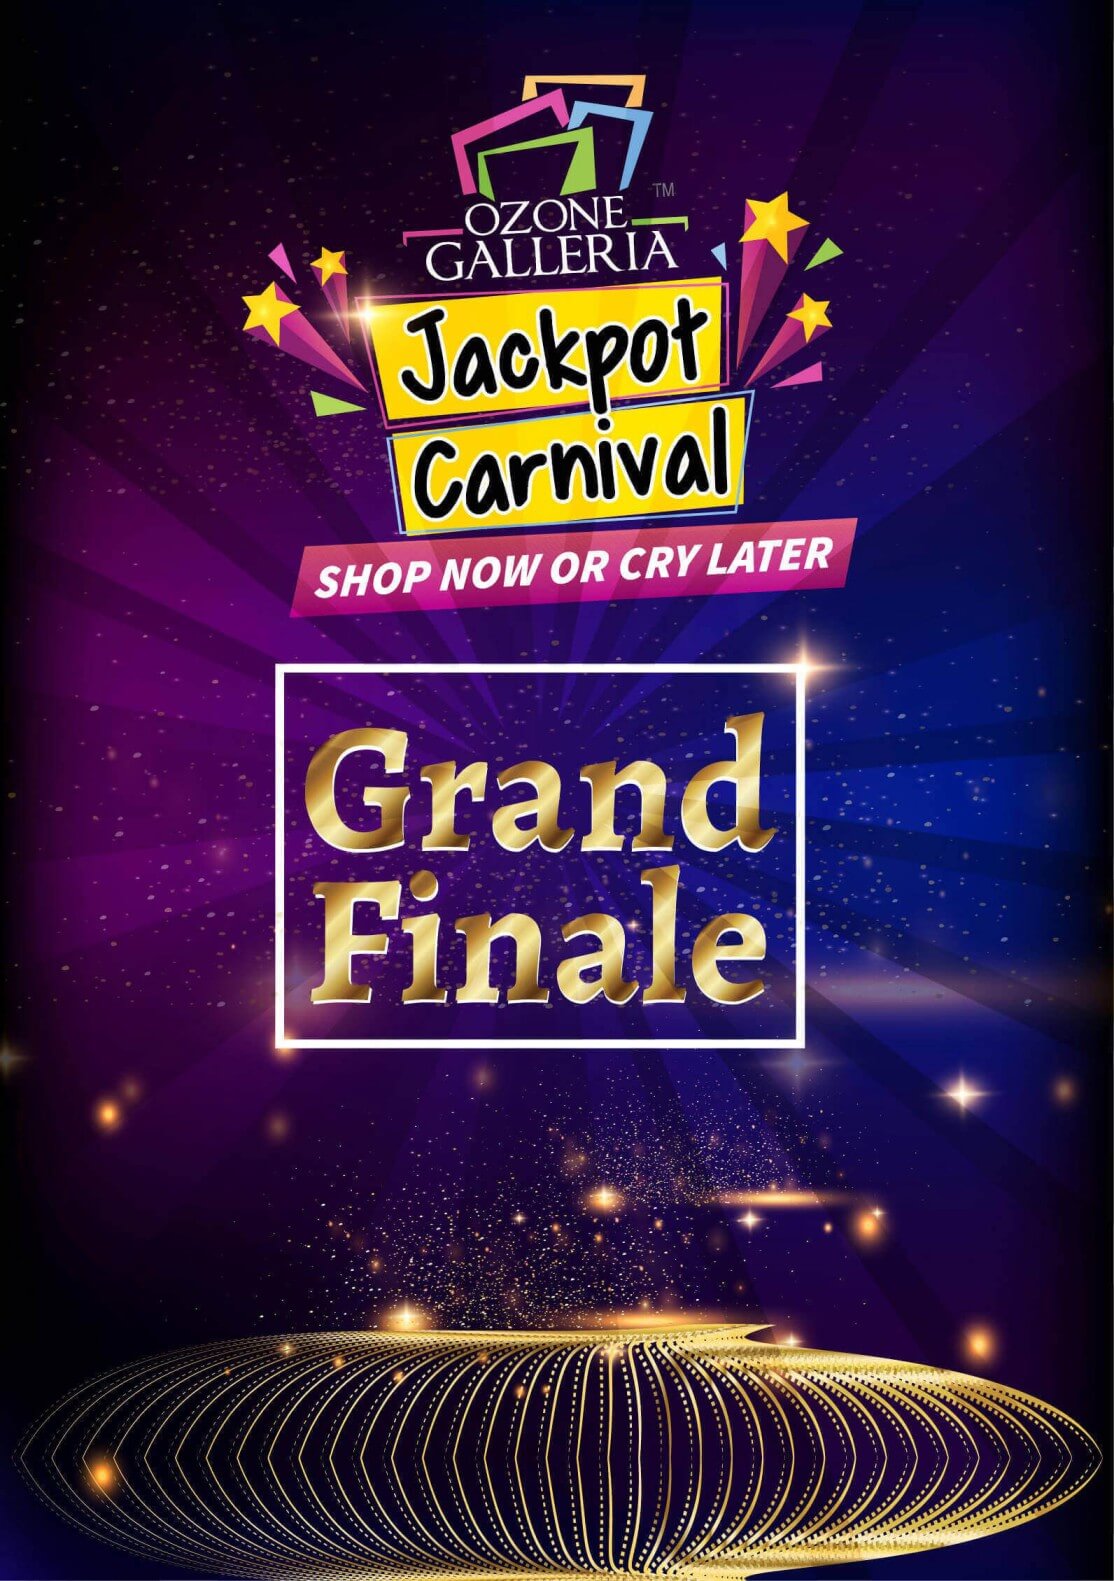 Jackpot Carnival at Ozone Galleria Mall Grand Finale banner